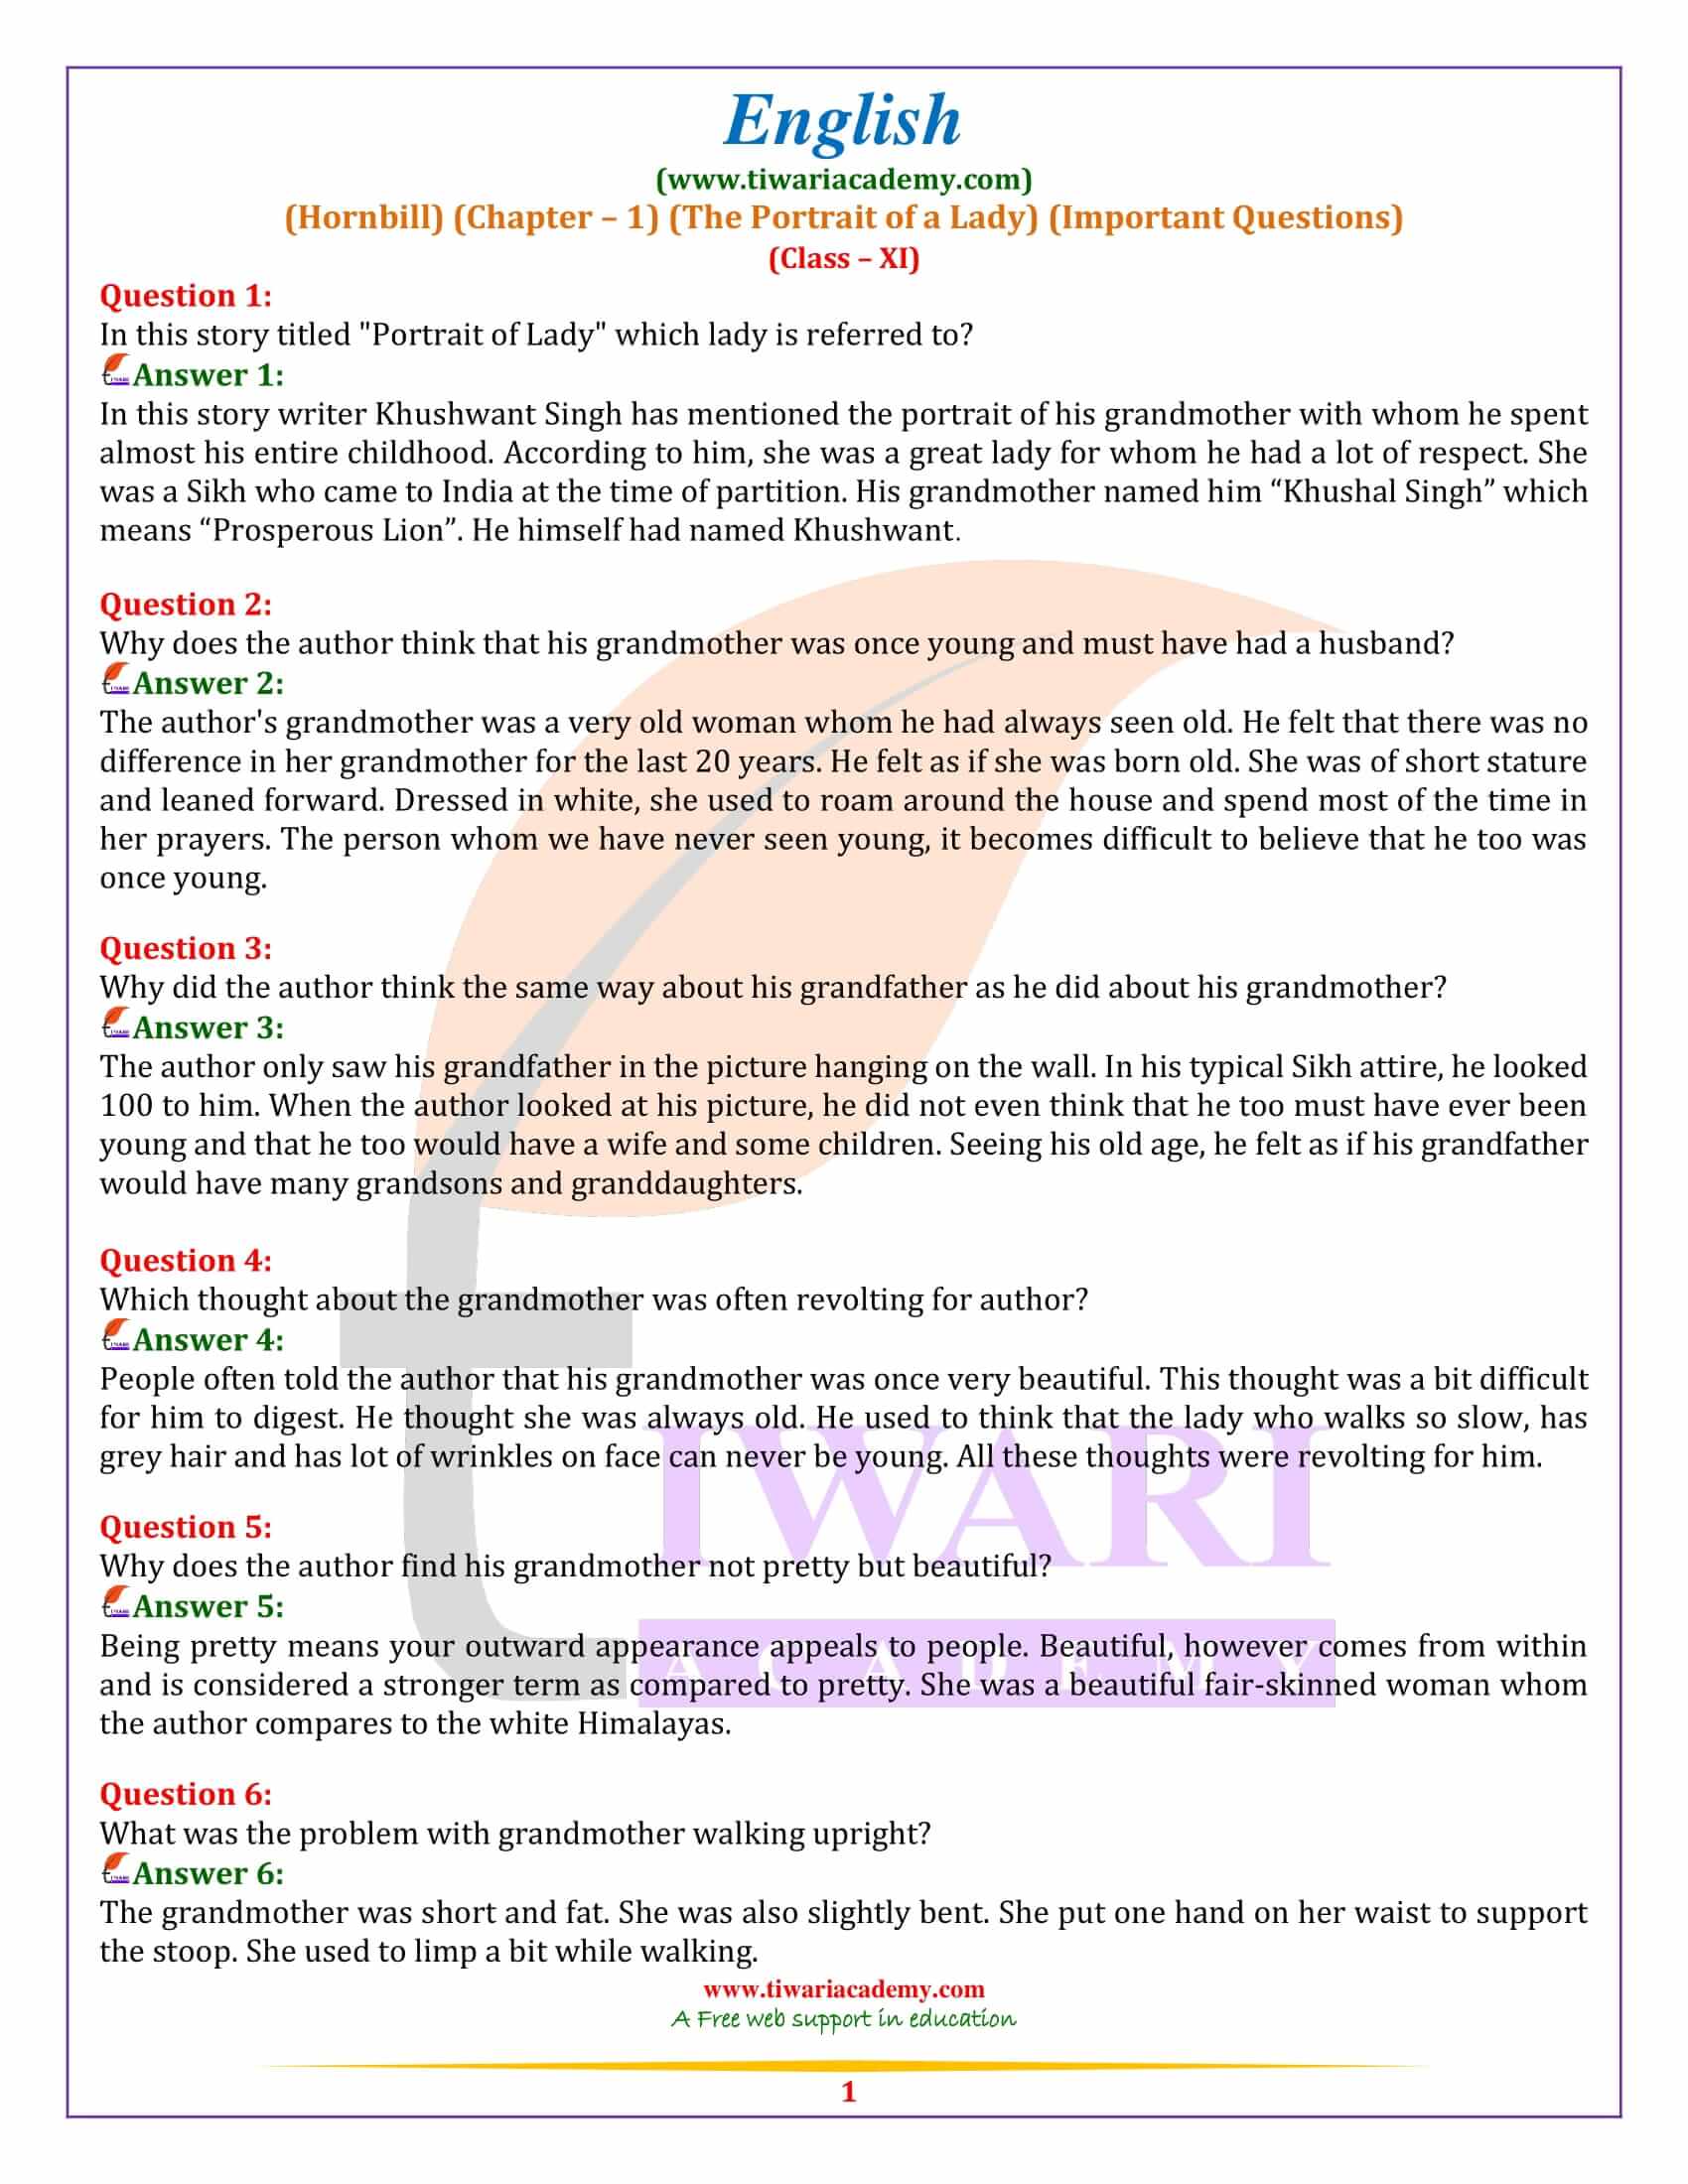 Class 11 English Hornbill Chapter 1 Extra Questions